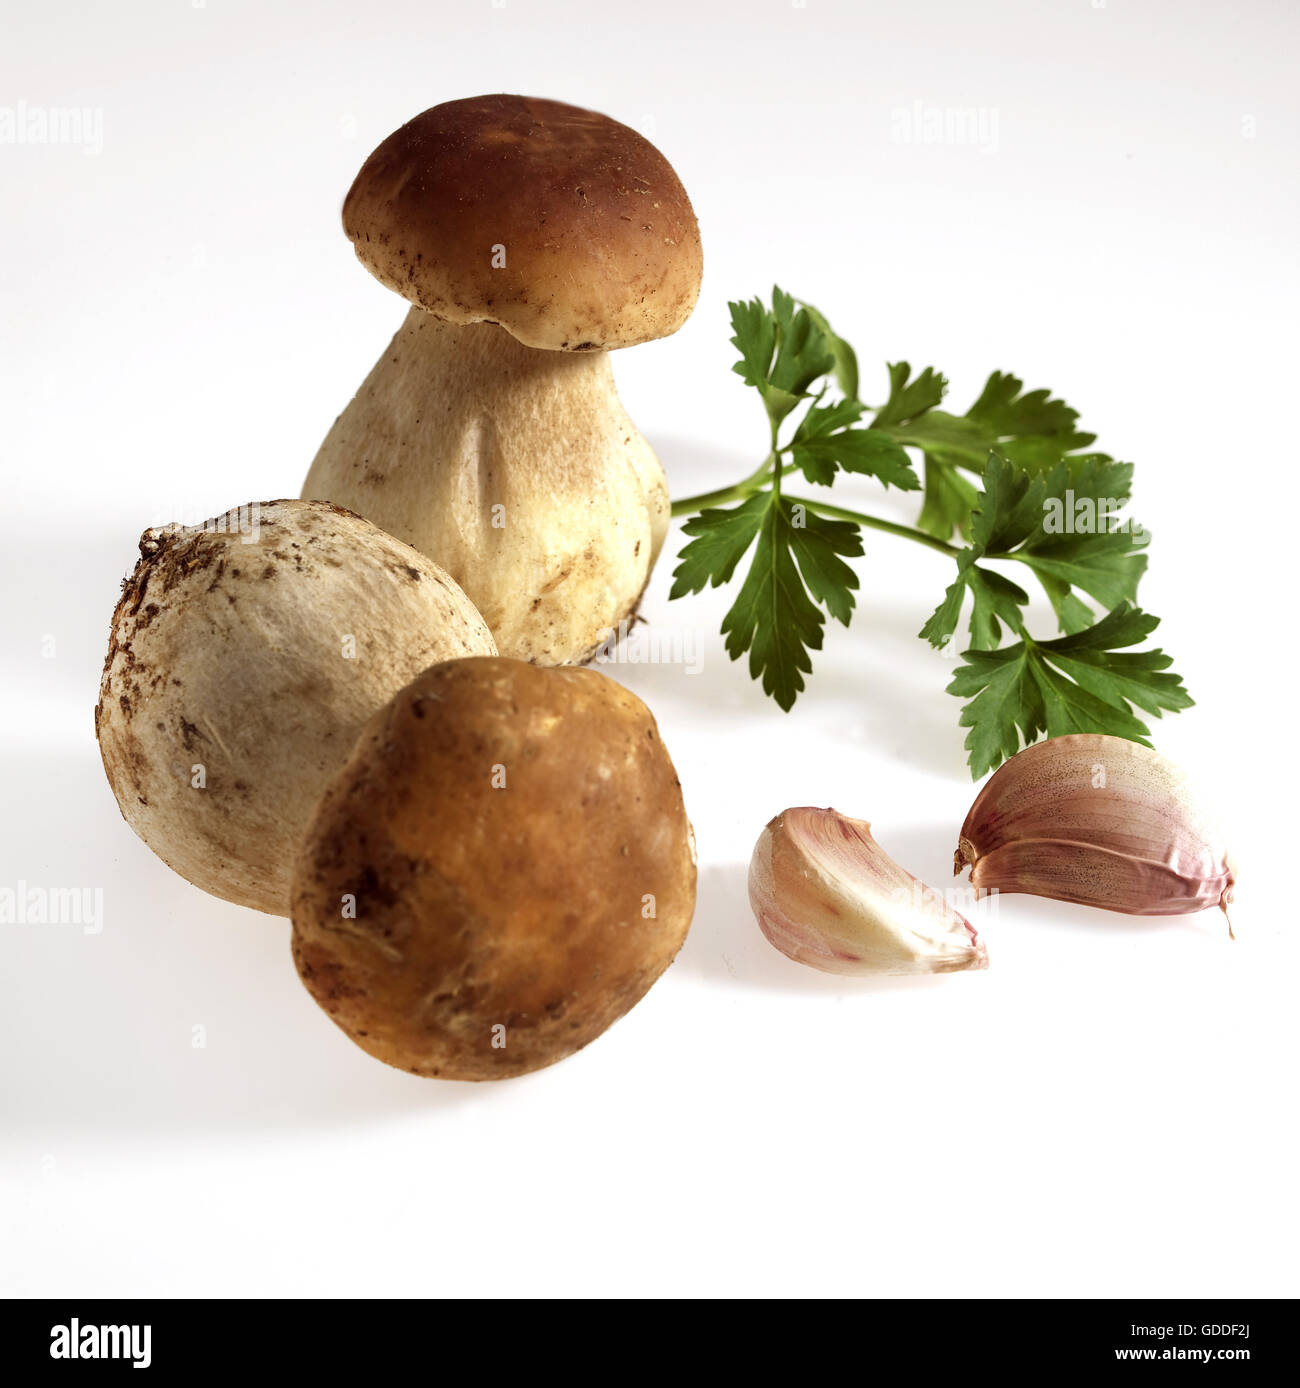 Cep or Penny Bun or King Bolete, boletus edulis, Mushrooms, Garlic and Parsley against White Background Stock Photo